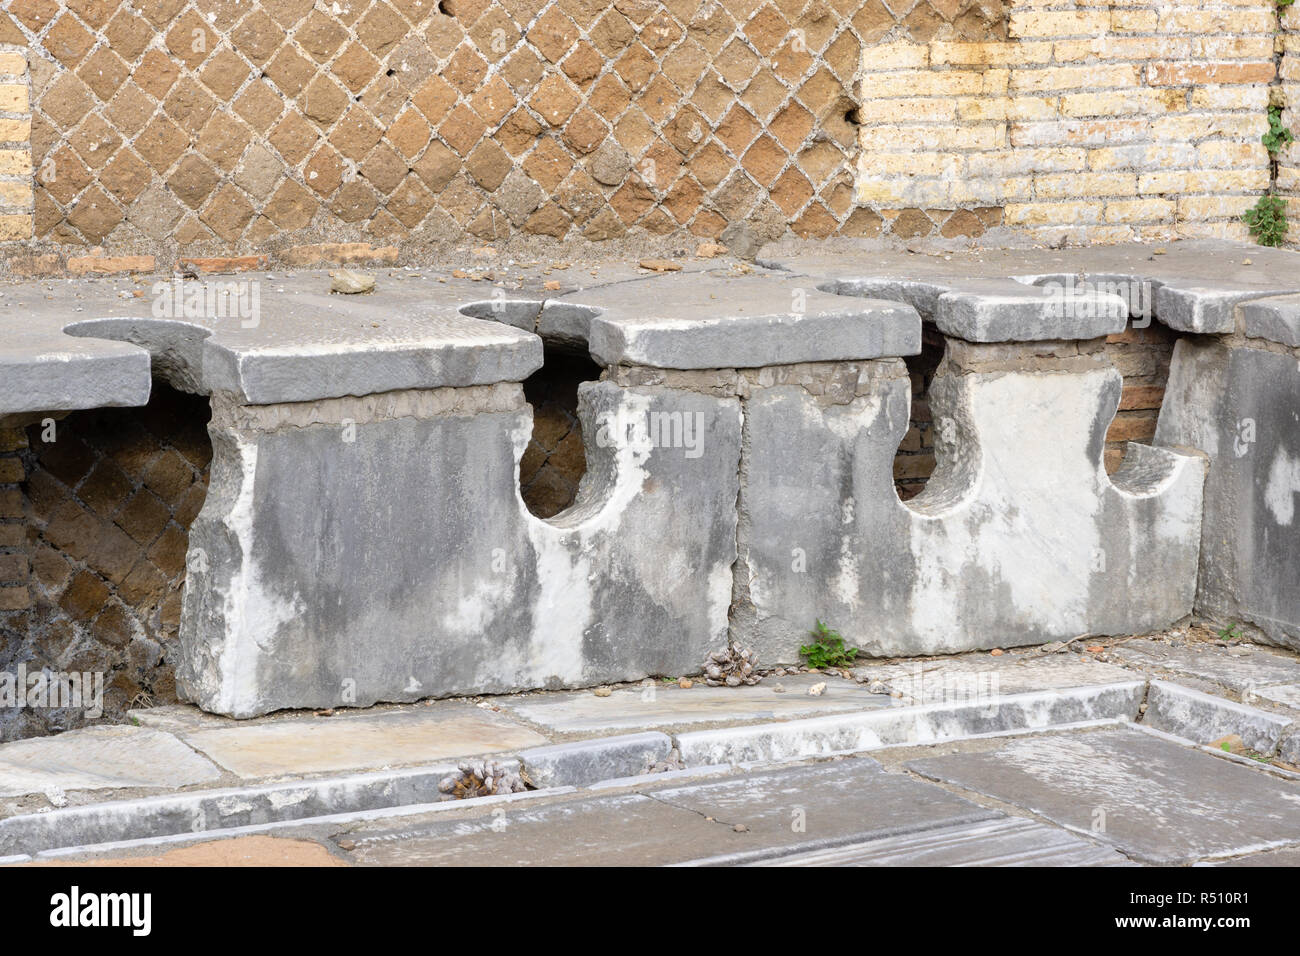 Ostia antica in Rome, Italy. Roman public latrine found in the excavations of Ostia Antica Stock Photo